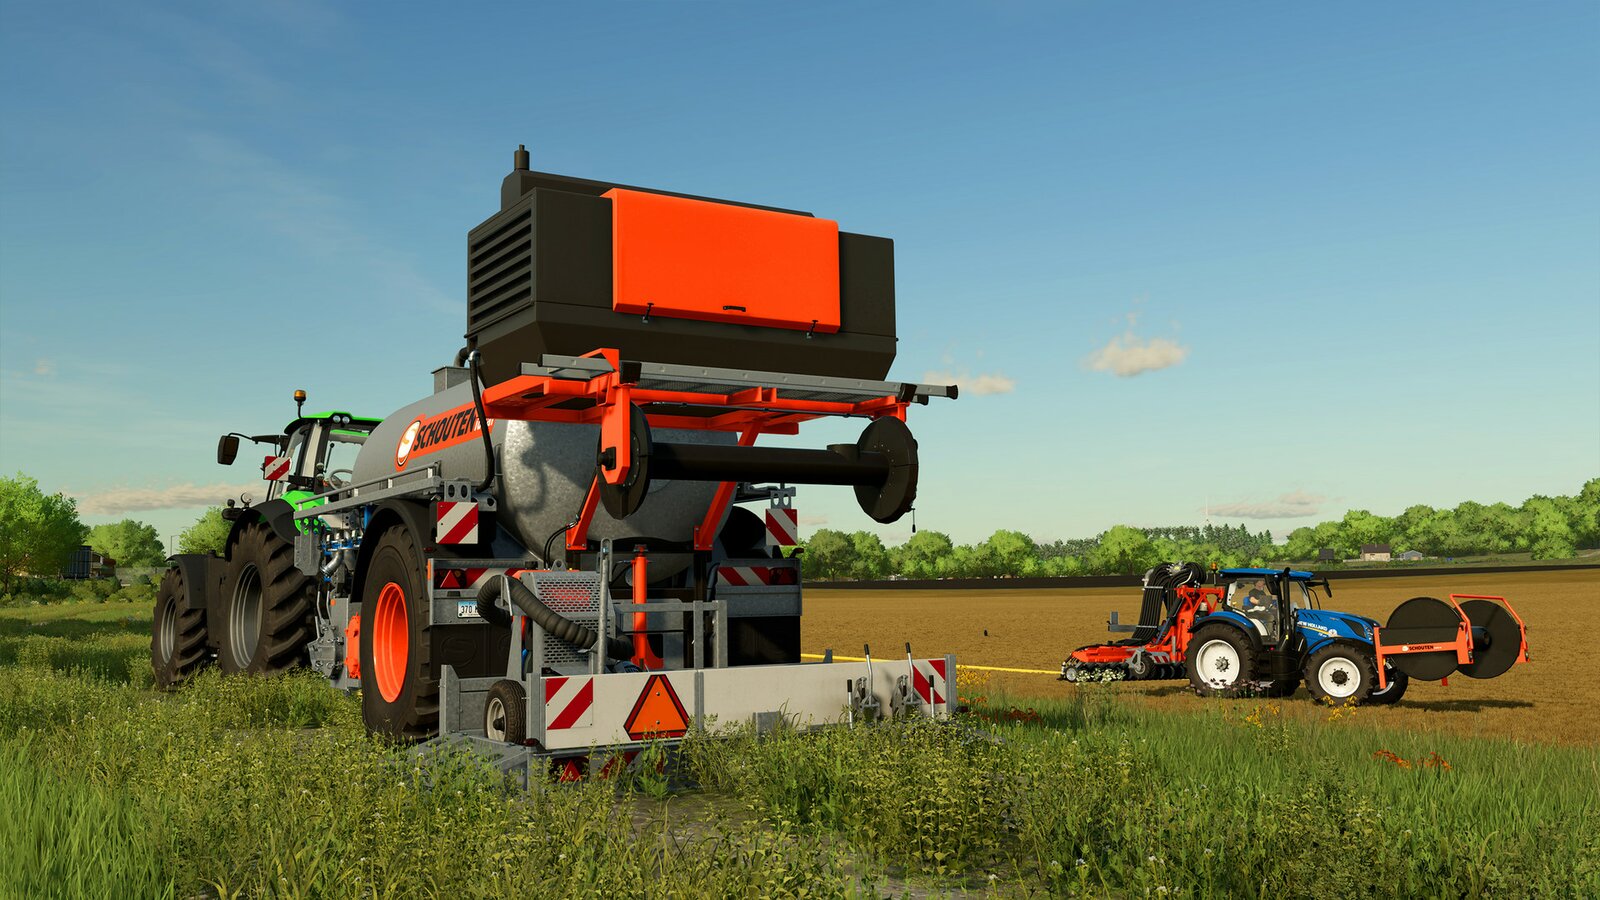 Farming Simulator 22 - Pumps n' Hoses